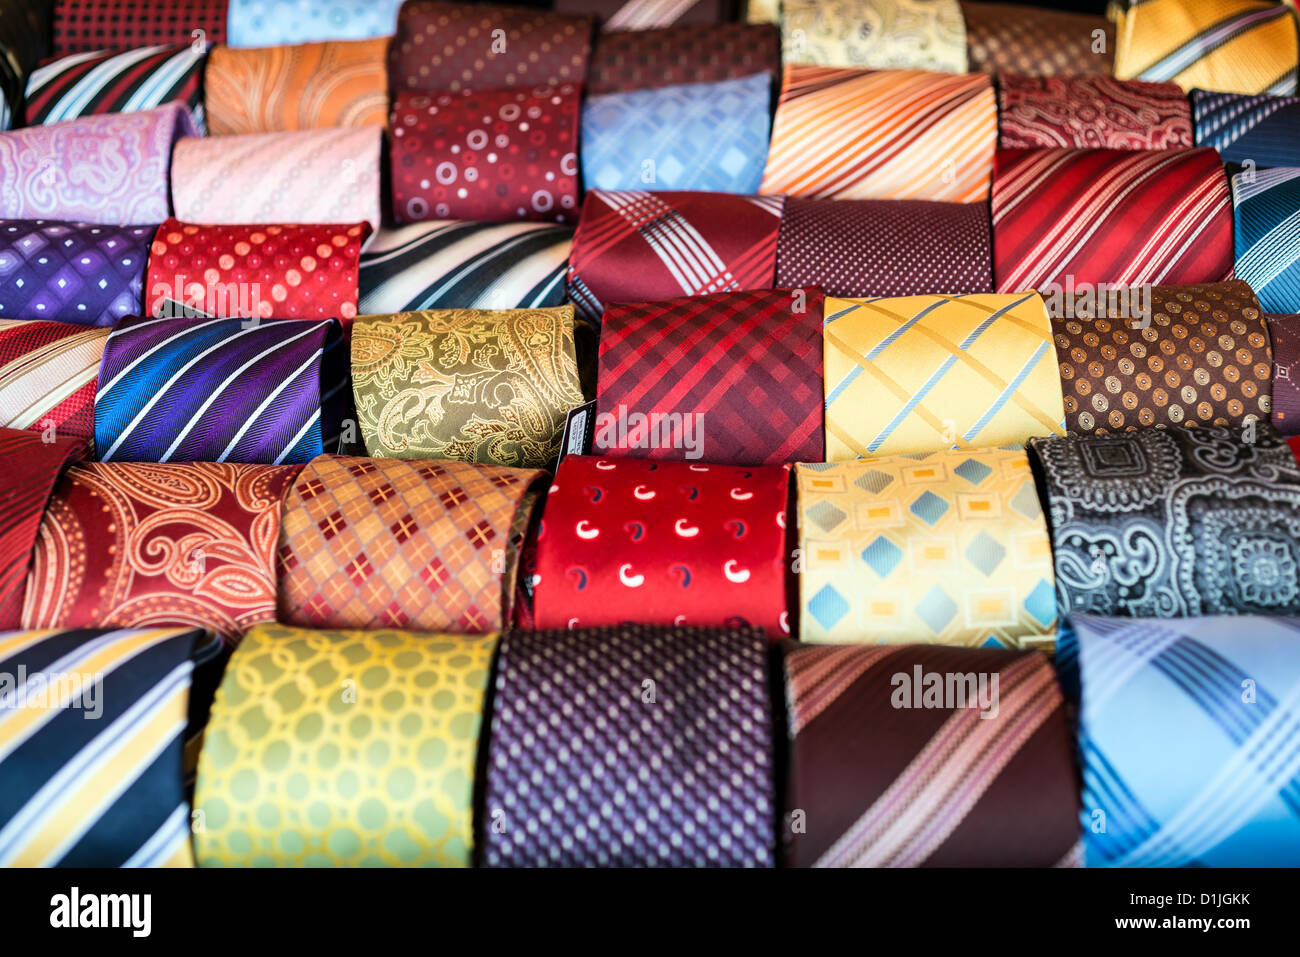 silk ties for sale